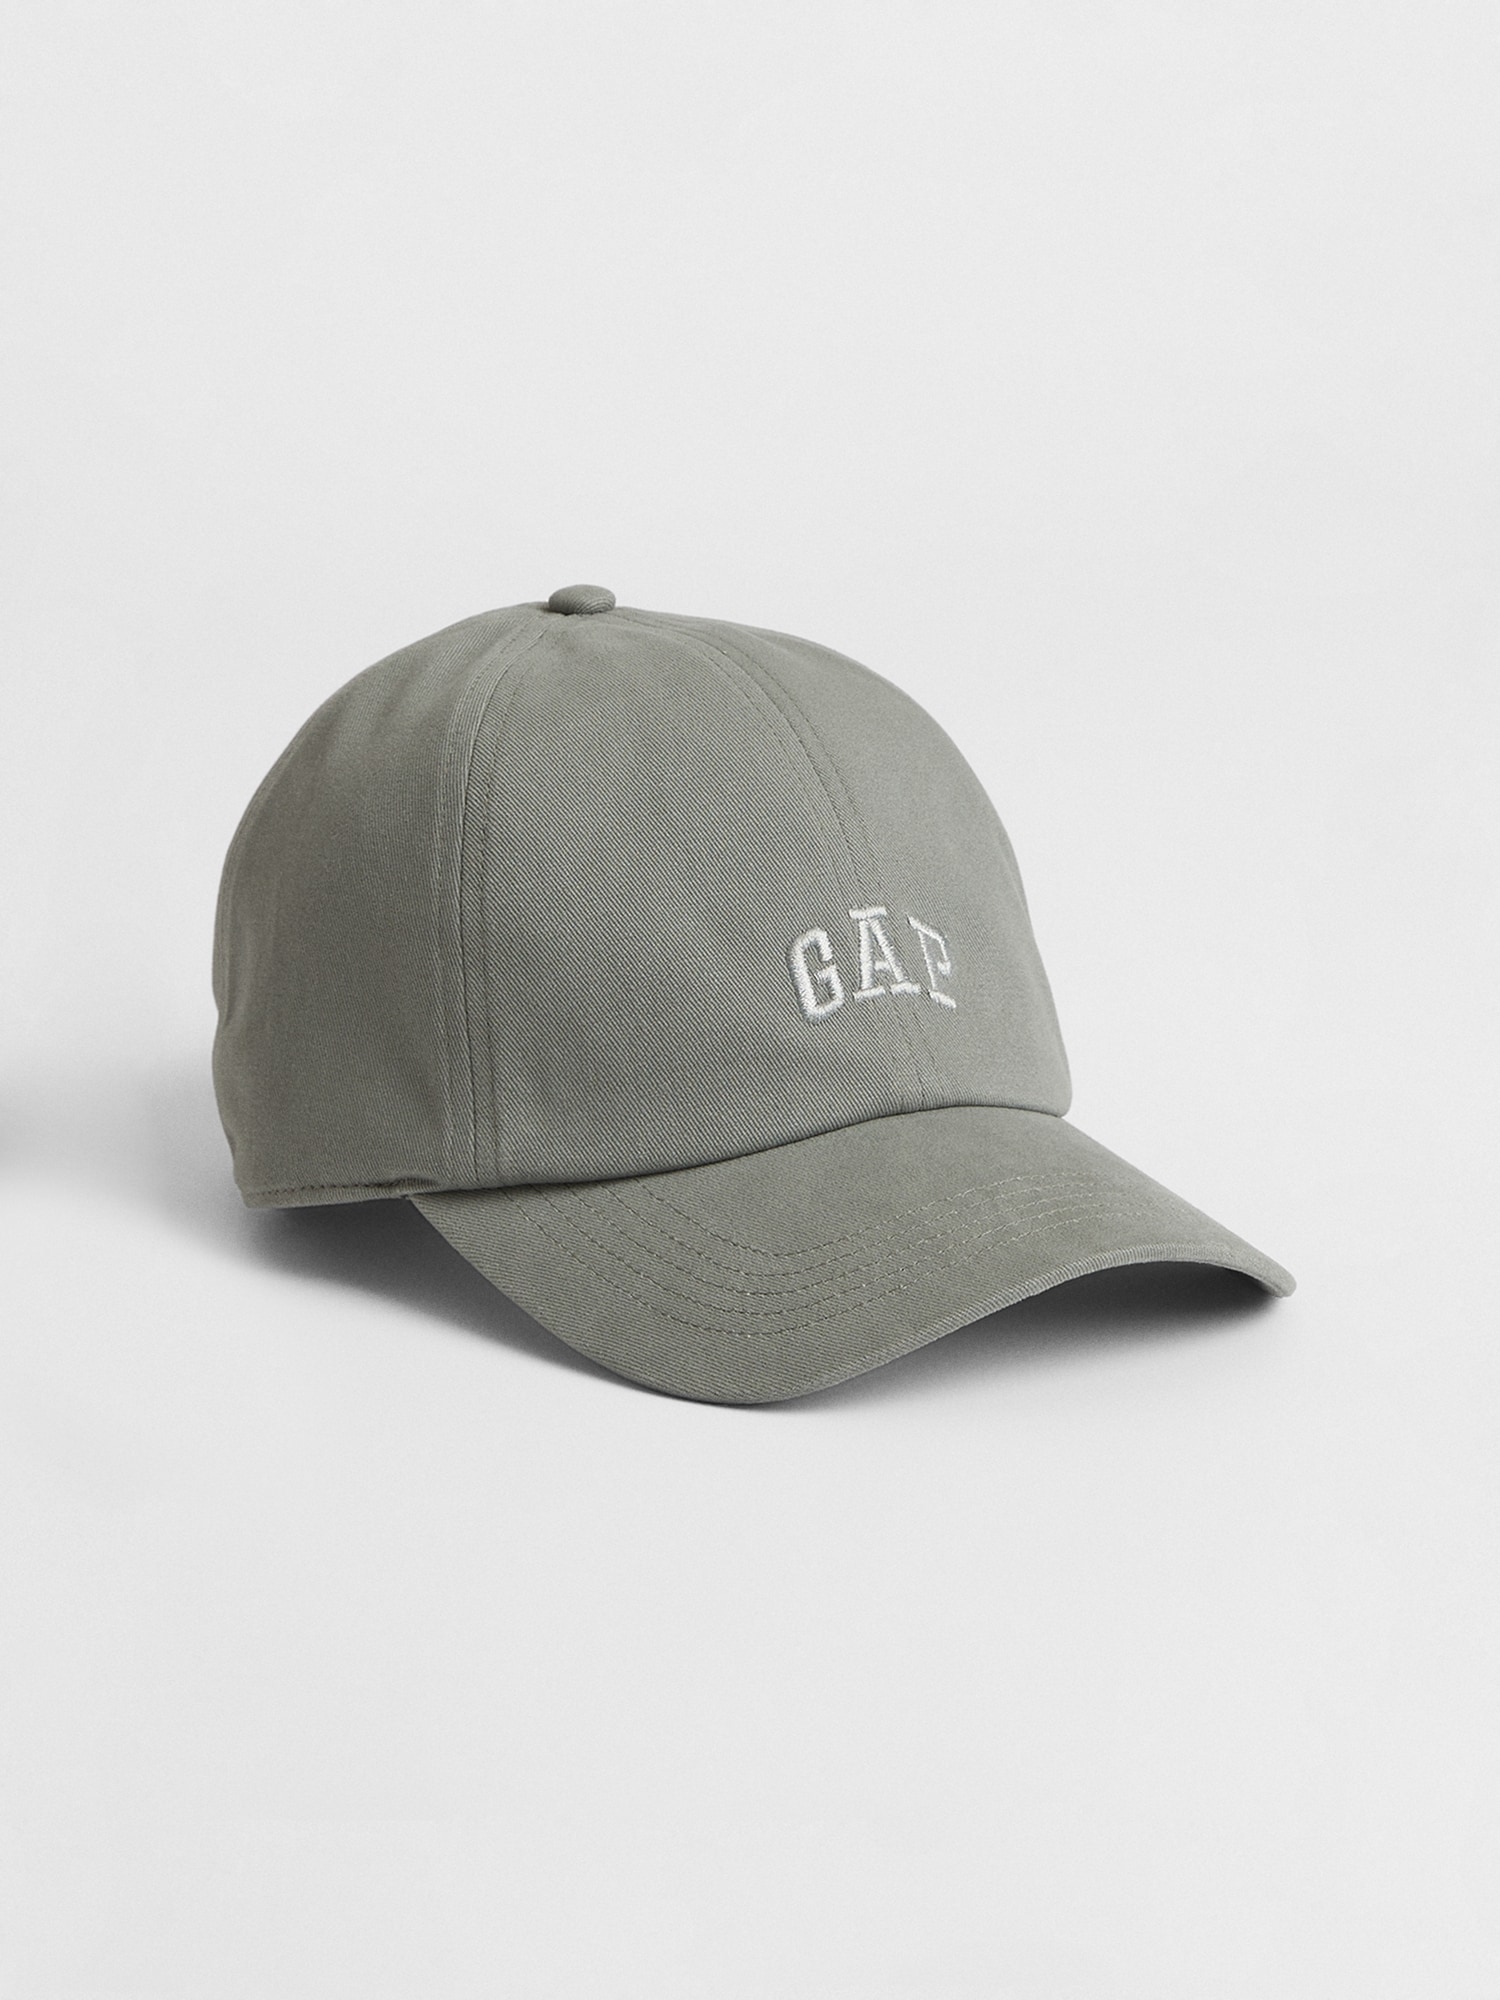 Gap Factory Sturdy Cotton Weave Gap Logo Baseball Hat (Vintage Palm Green)